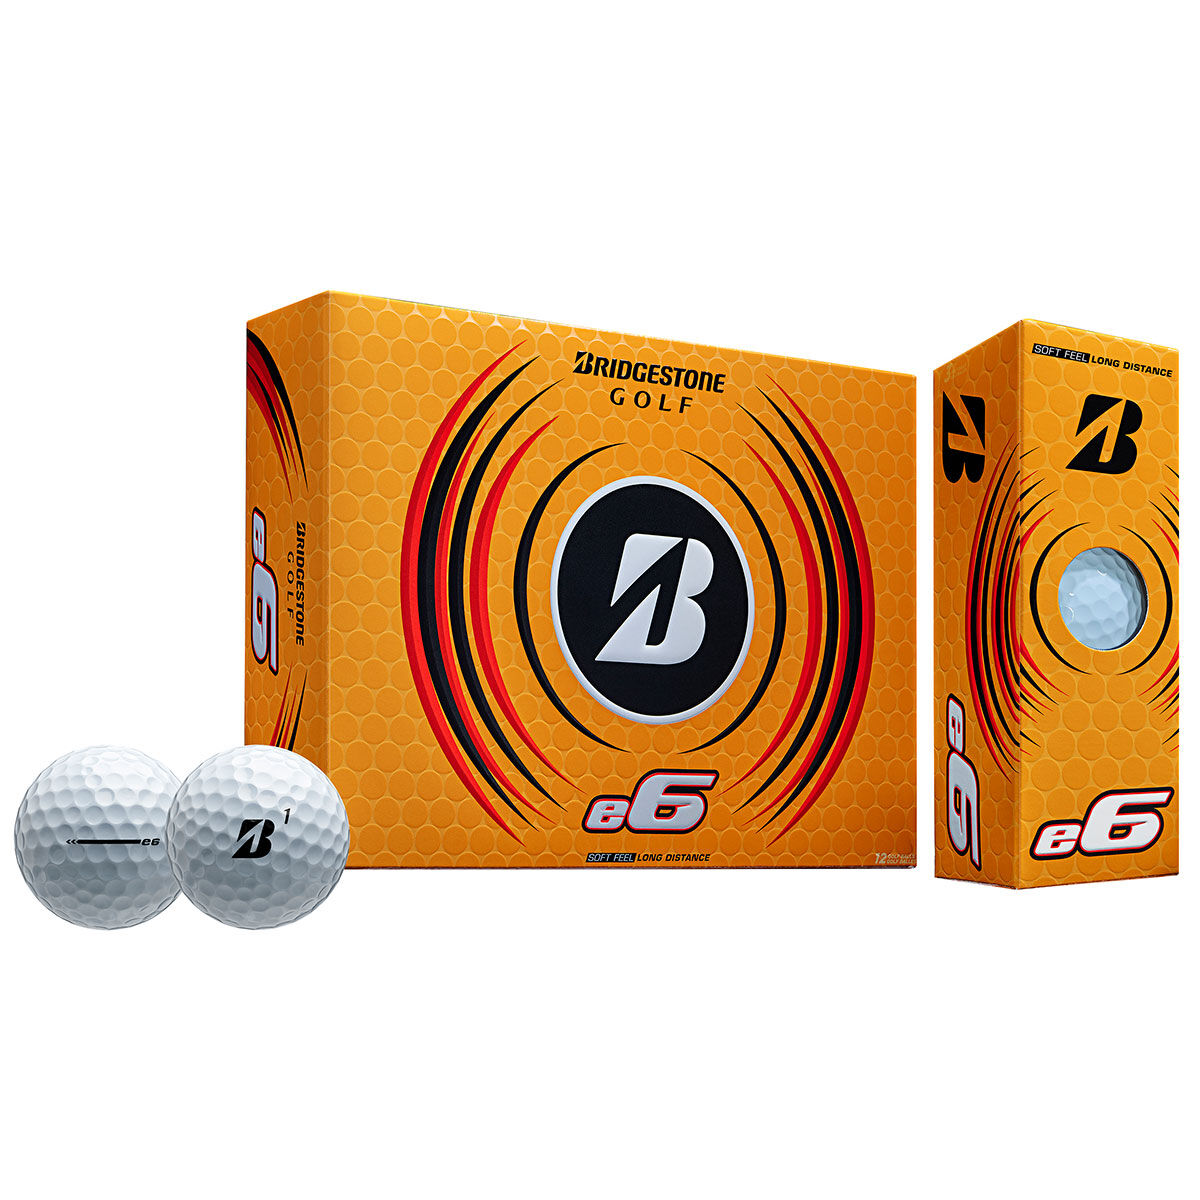 Bridgestone Golf White Dimple e6 12 Golf Ball Pack | American Golf, One Size